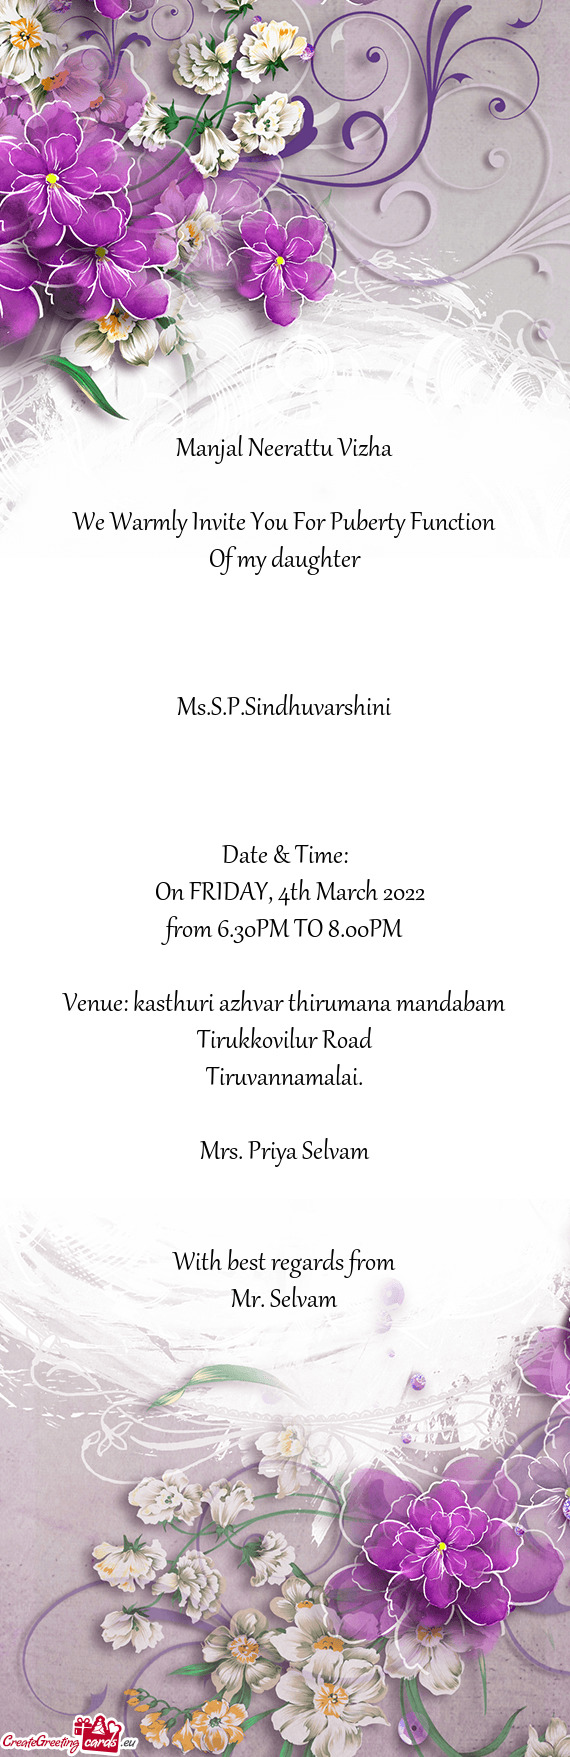 Ms.S.P.Sindhuvarshini